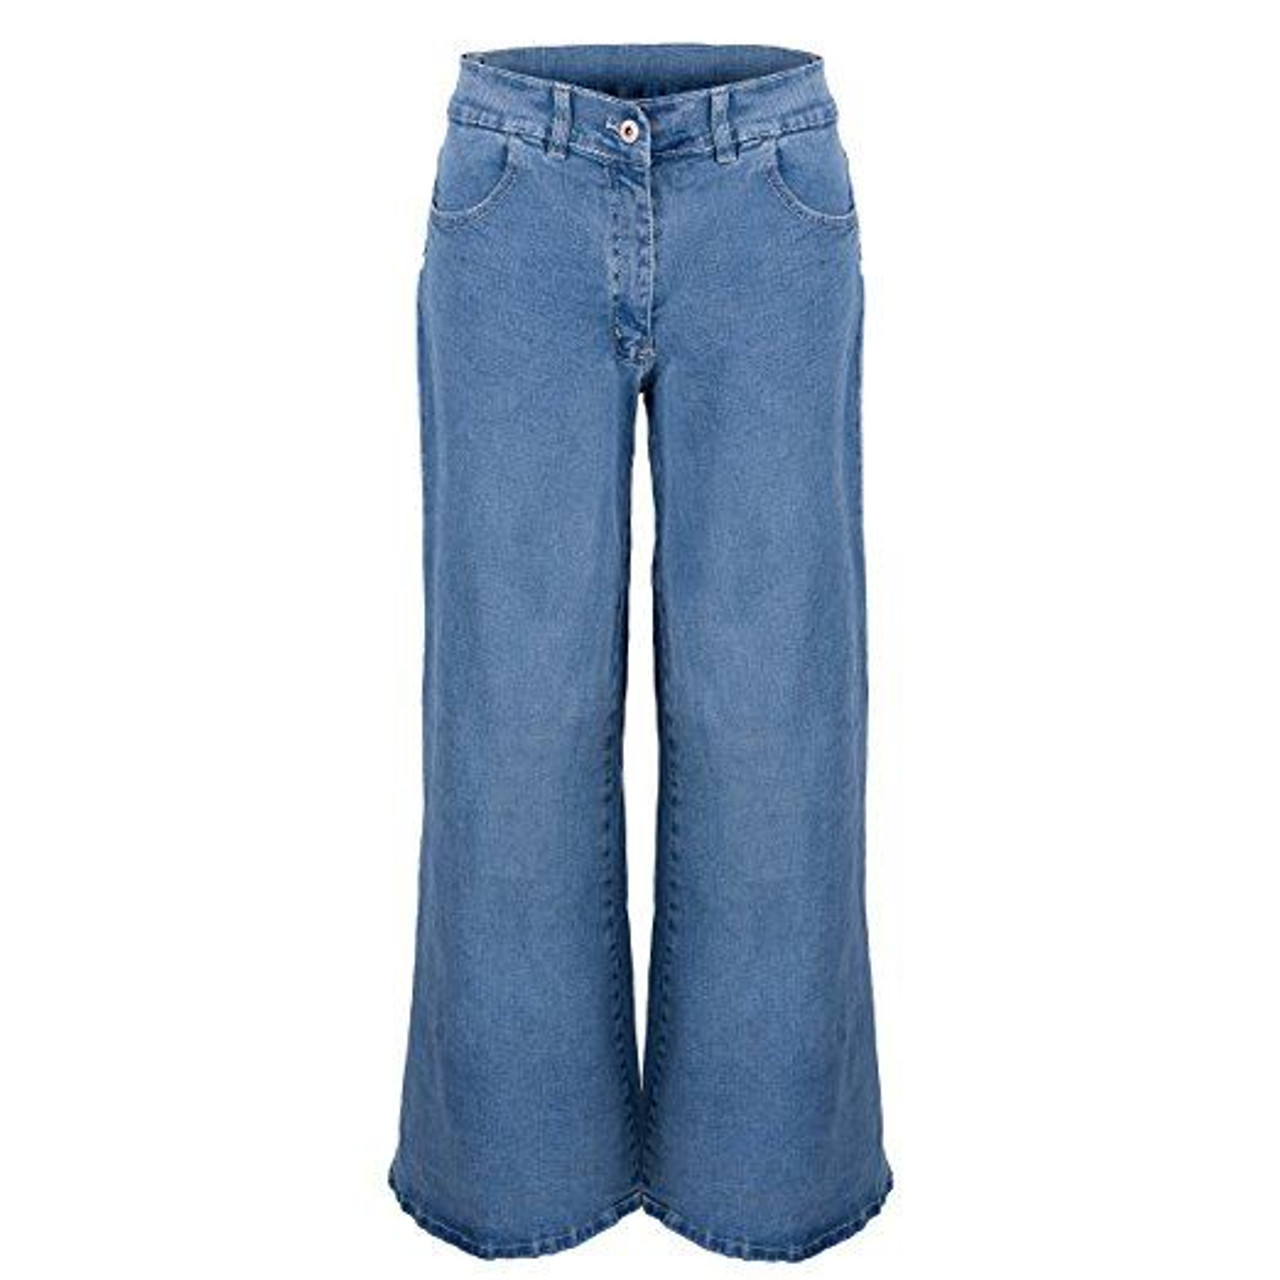 60s 70s Hippie Bell Bottom Jeans Pants Online Shopping